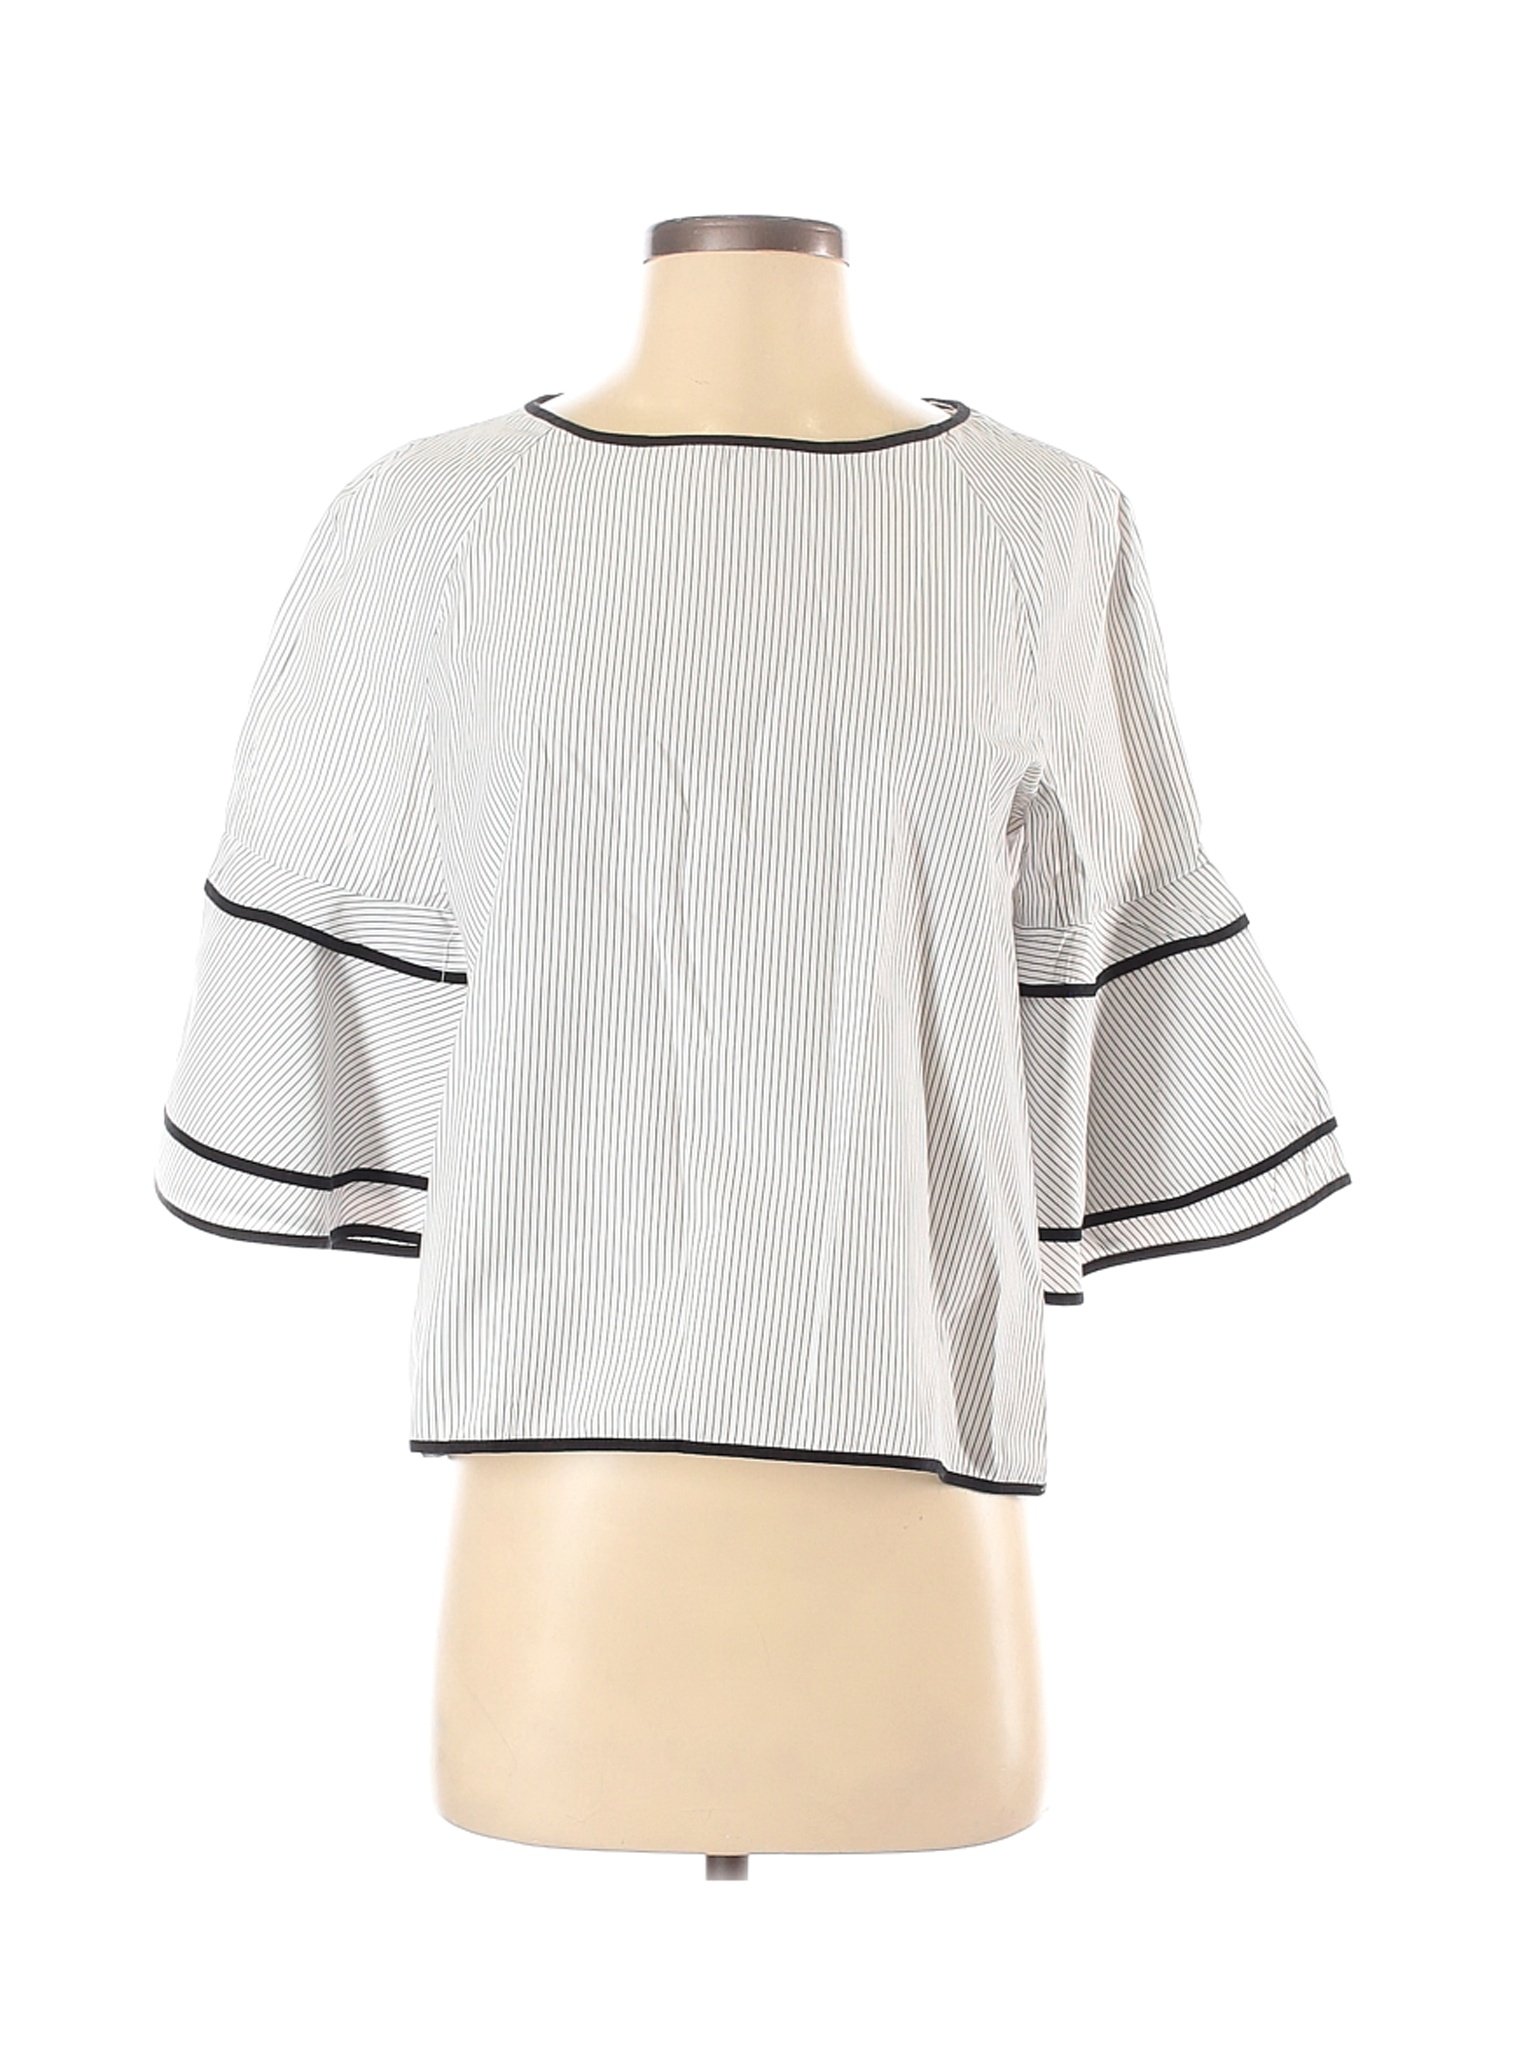 Aqua Women White 3/4 Sleeve Blouse S | eBay